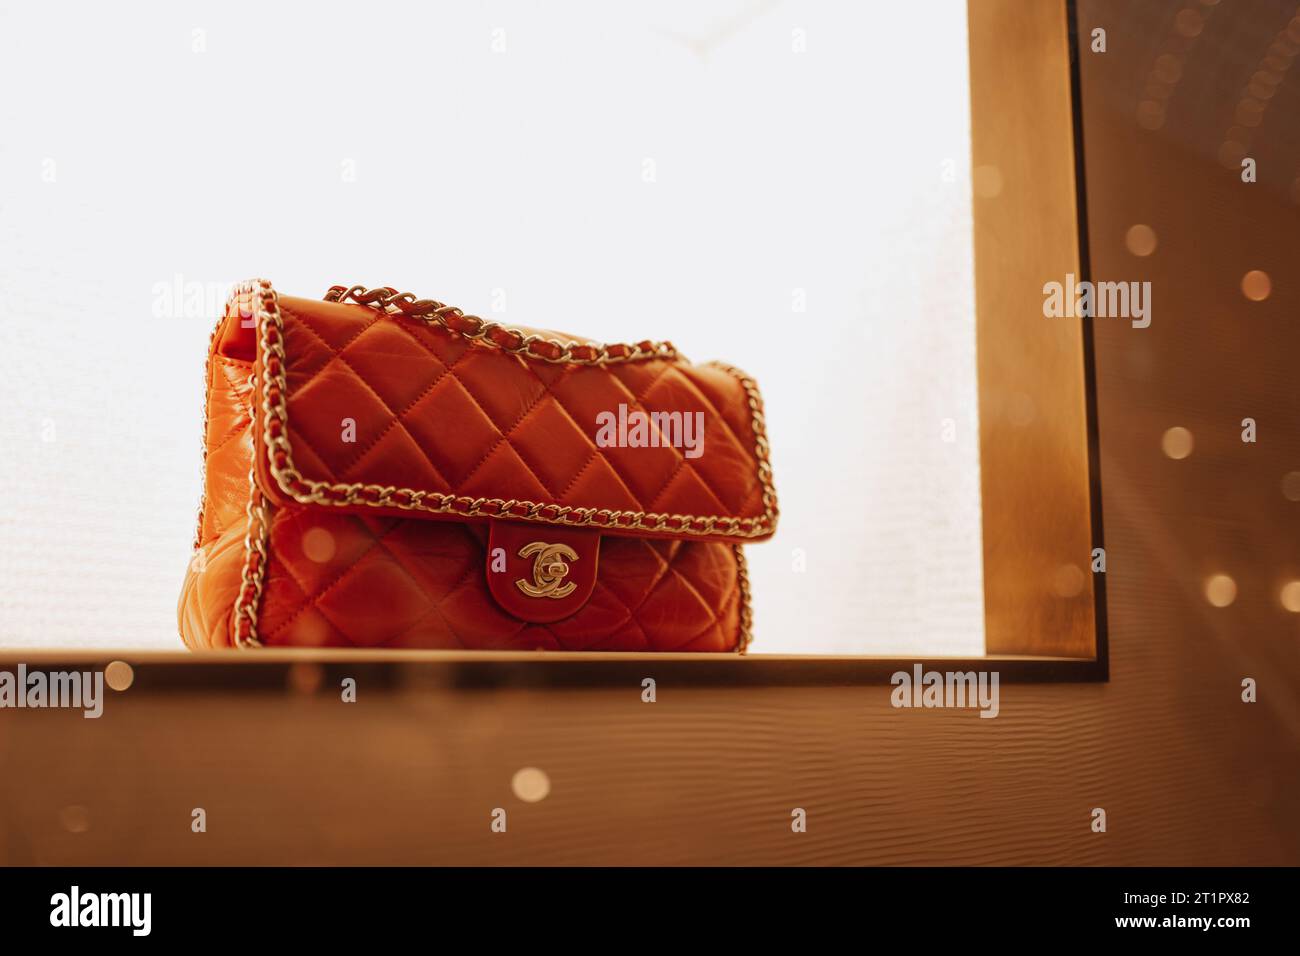 Chanel handbag 2010 hi-res stock photography and images - Alamy